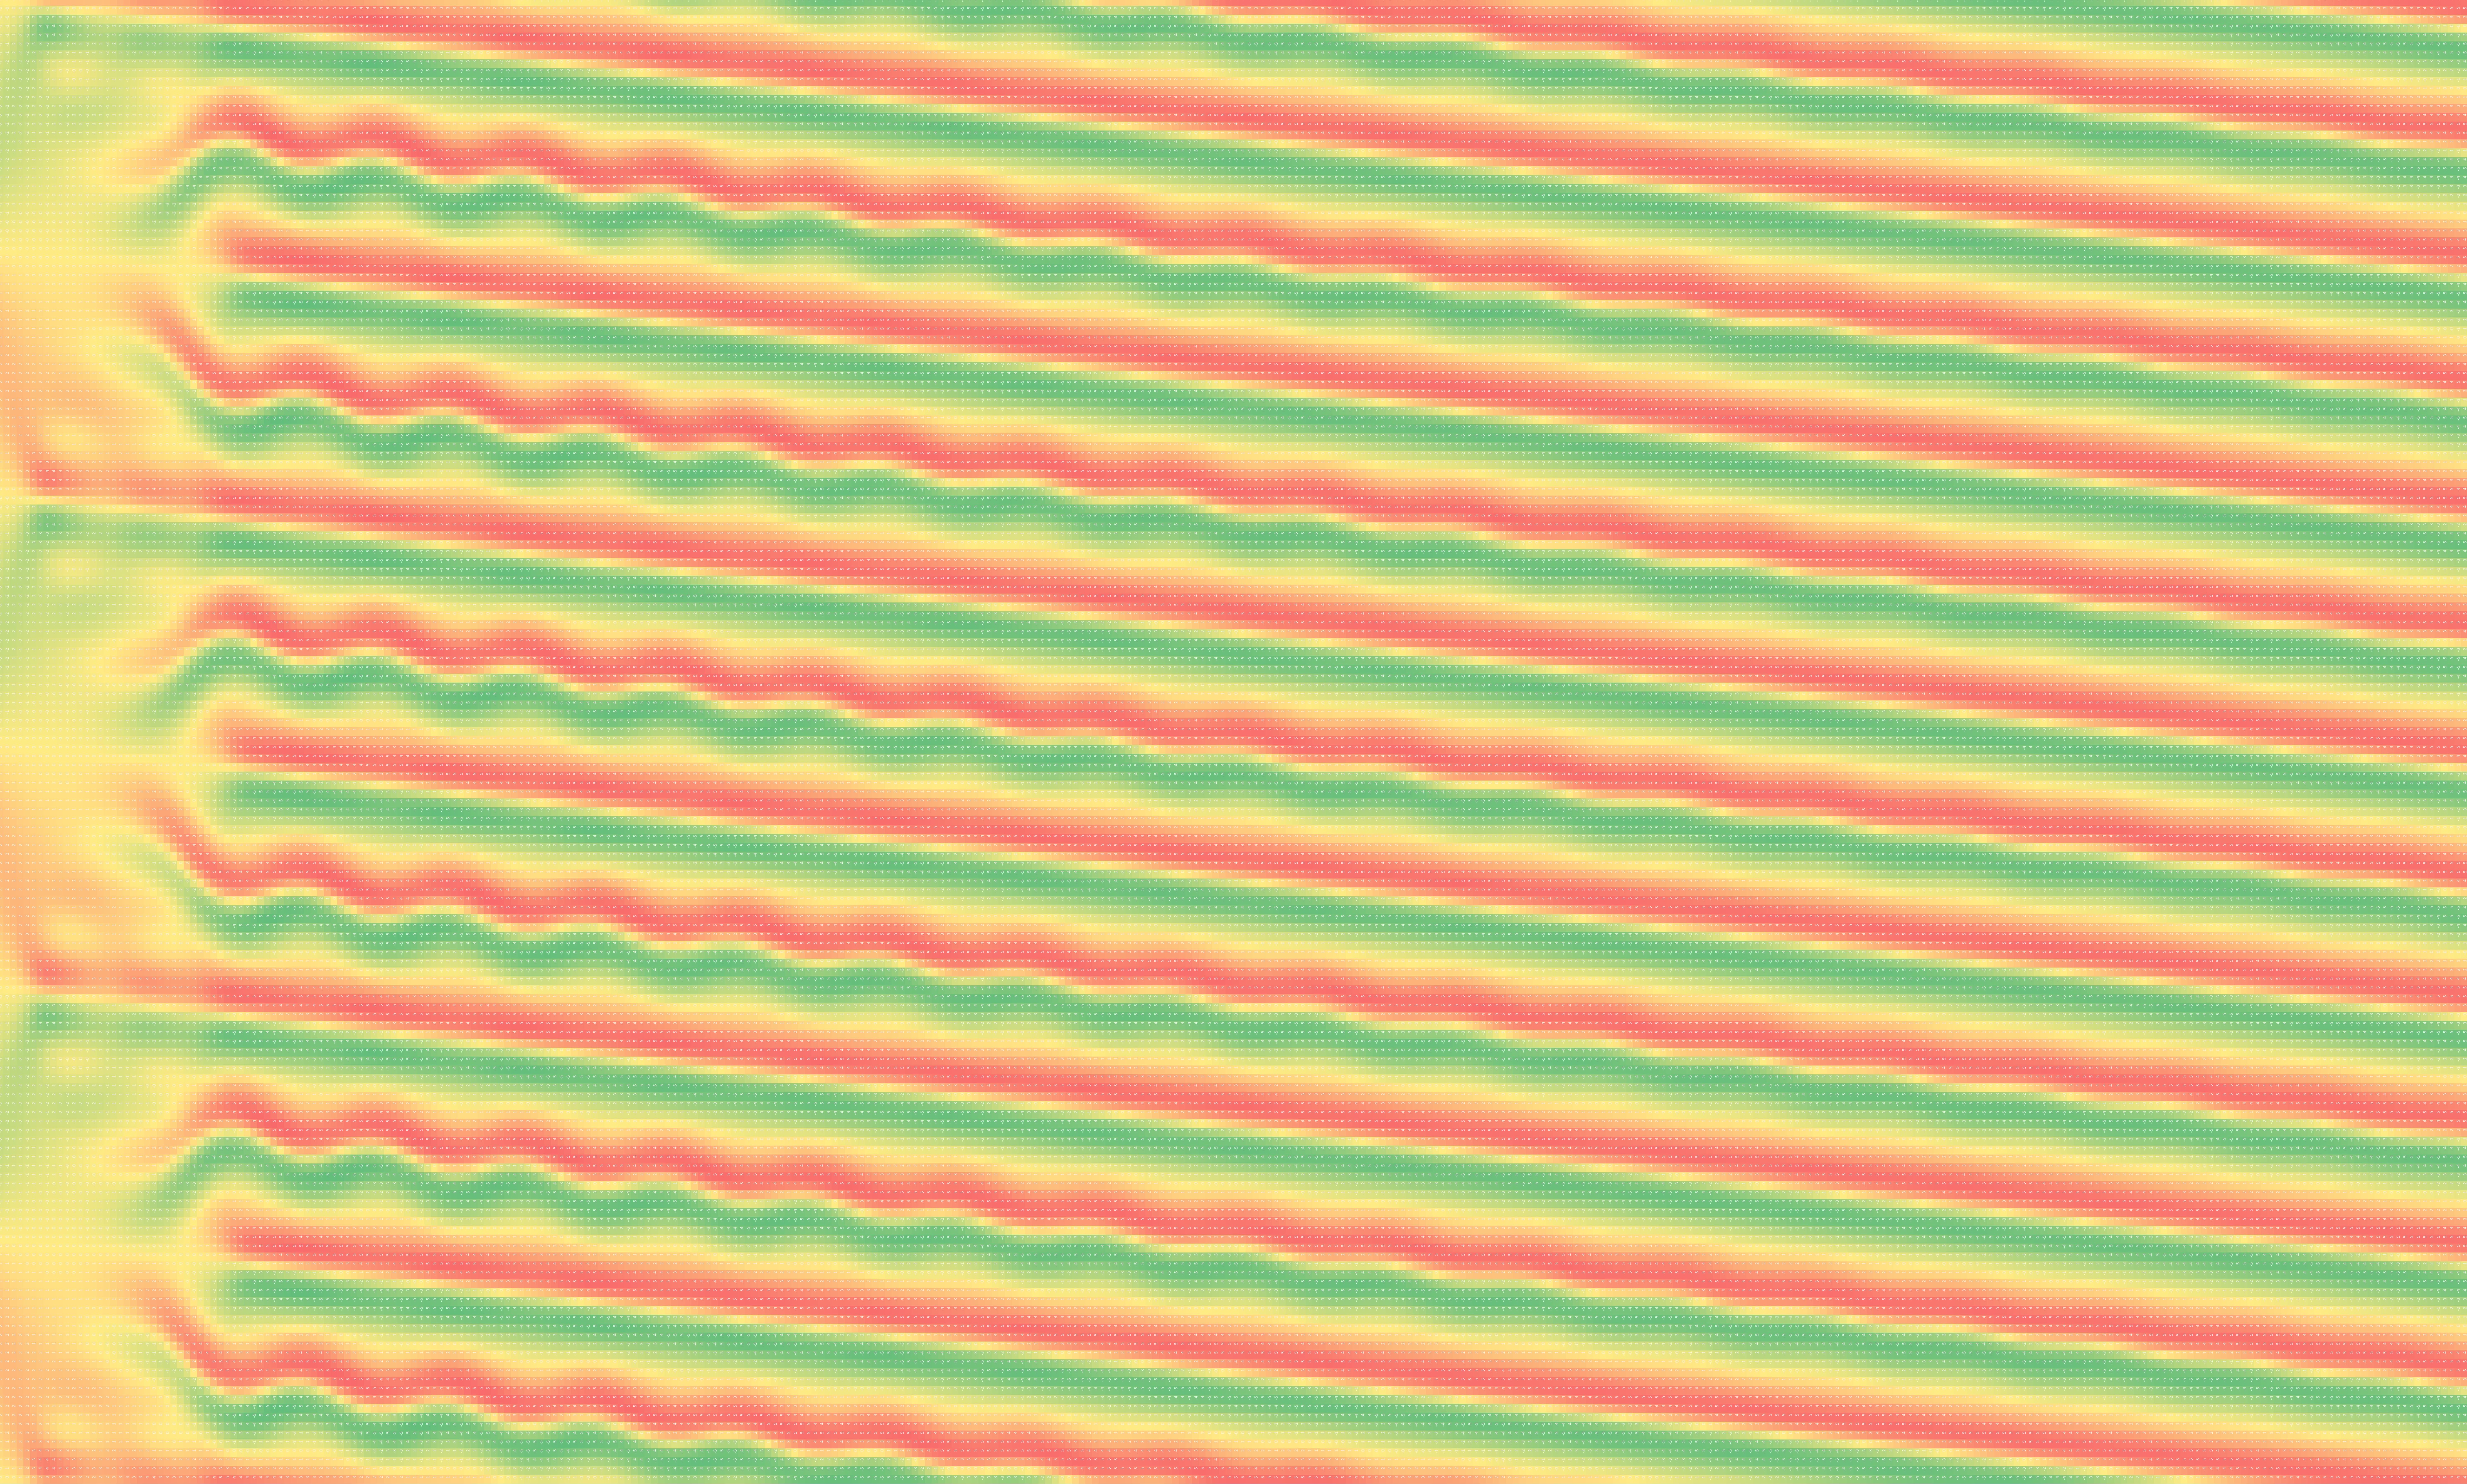 Regular stripes of Kuramoto